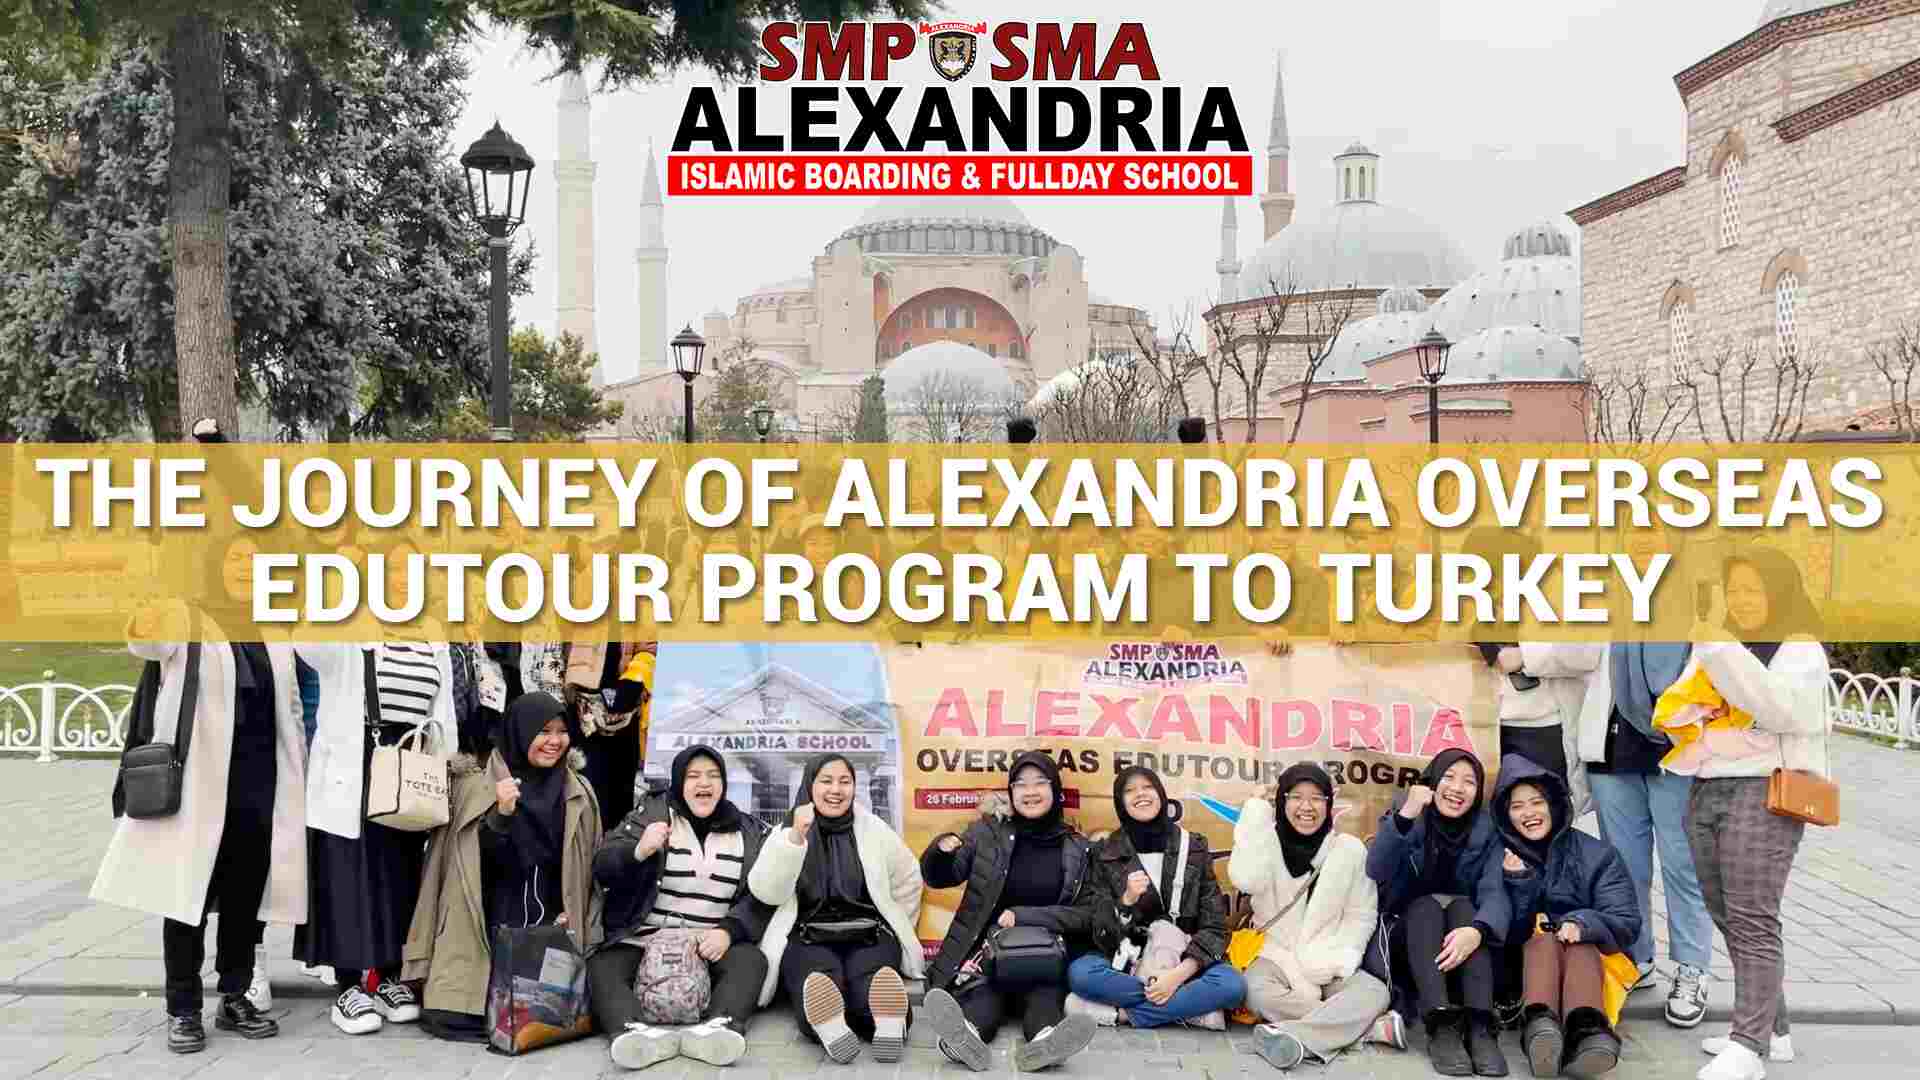 THE JOURNEY OF ALEXANDRIA OVERSEAS EDUTOUR PROGRAM TO TURKEY